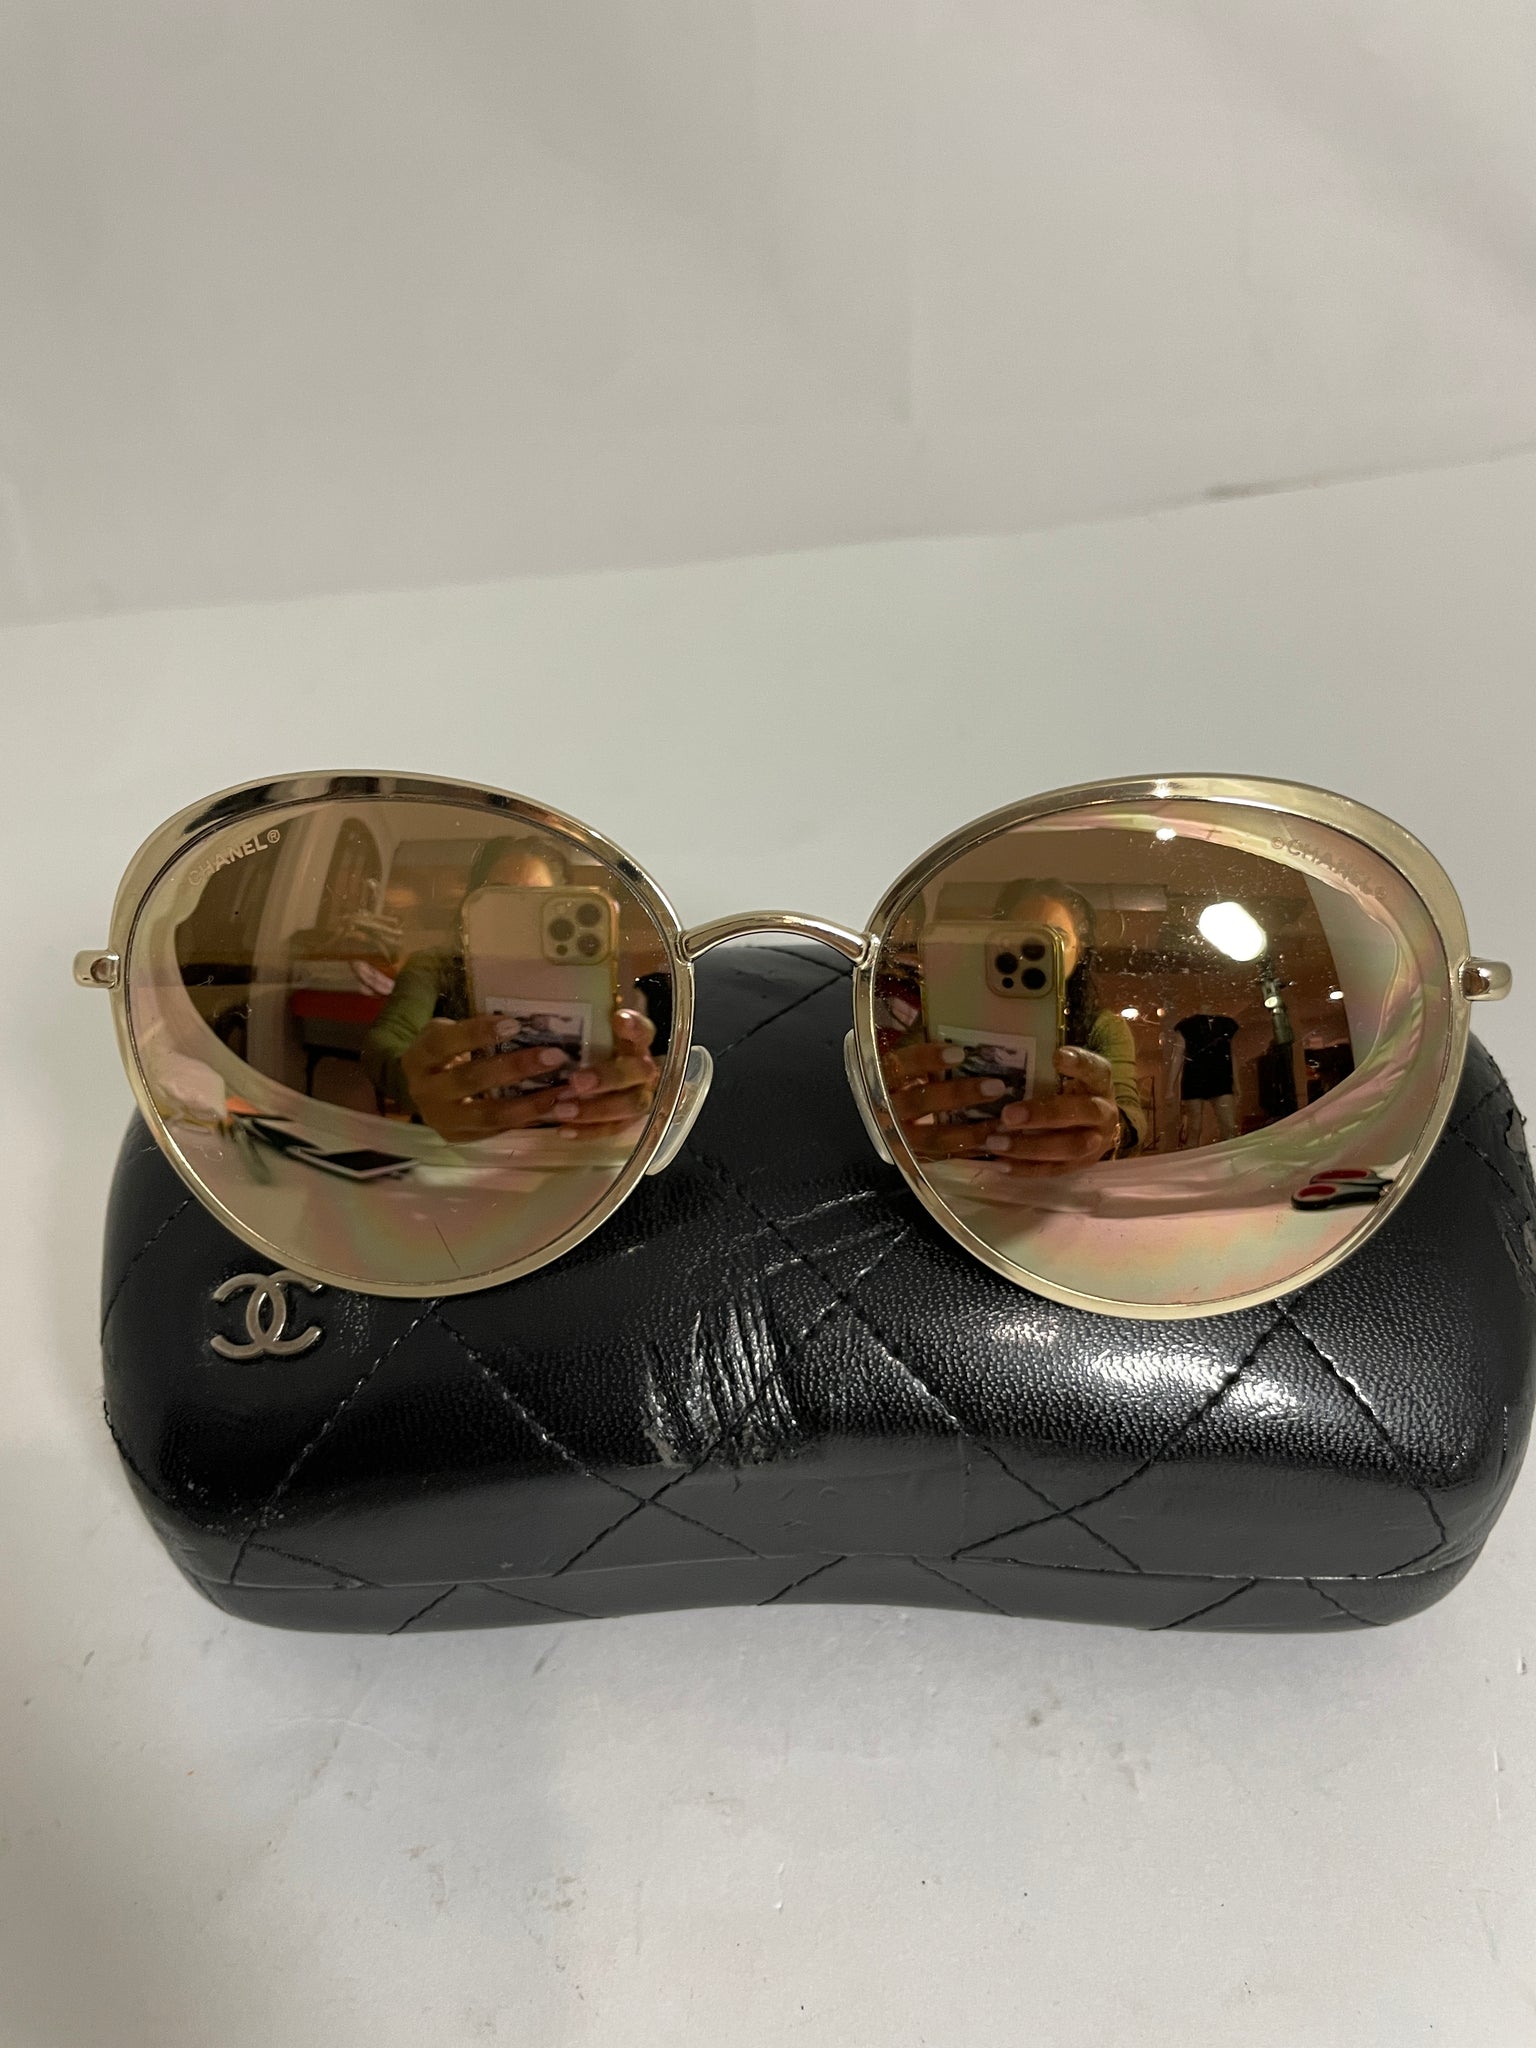 chanel aviator sunglasses gold